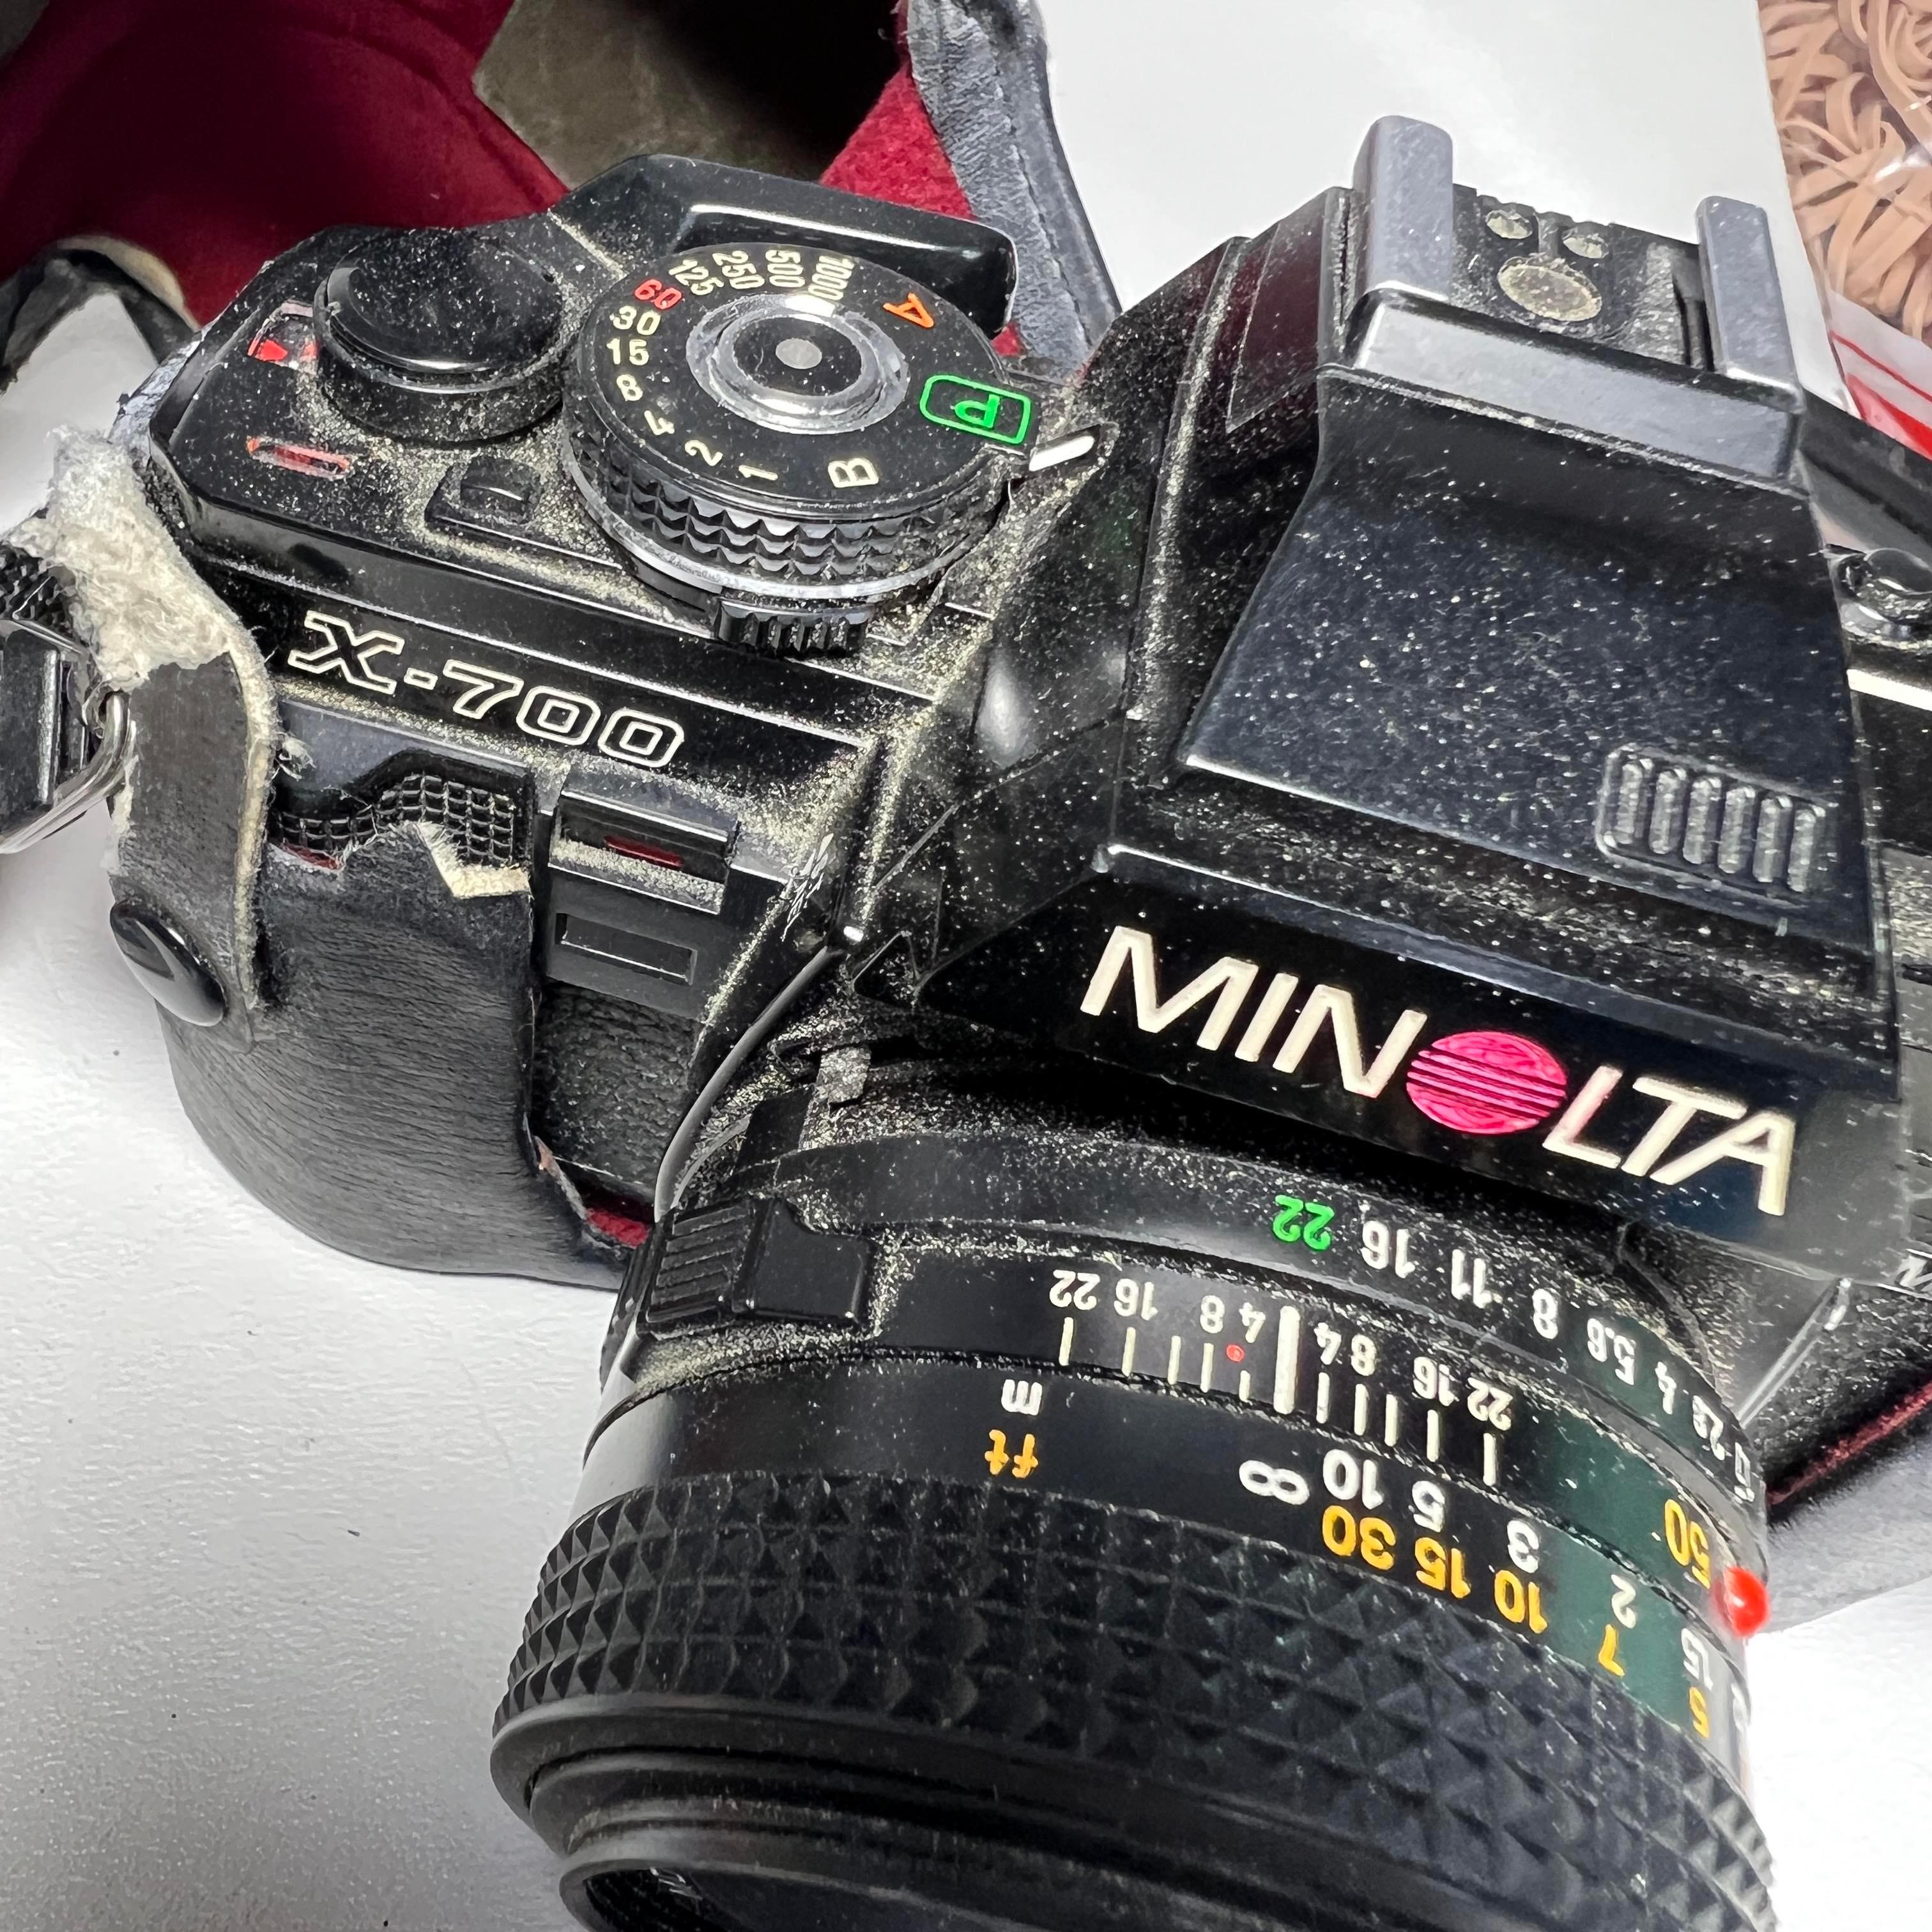 Minolta X-700 Camera with Many Accessories